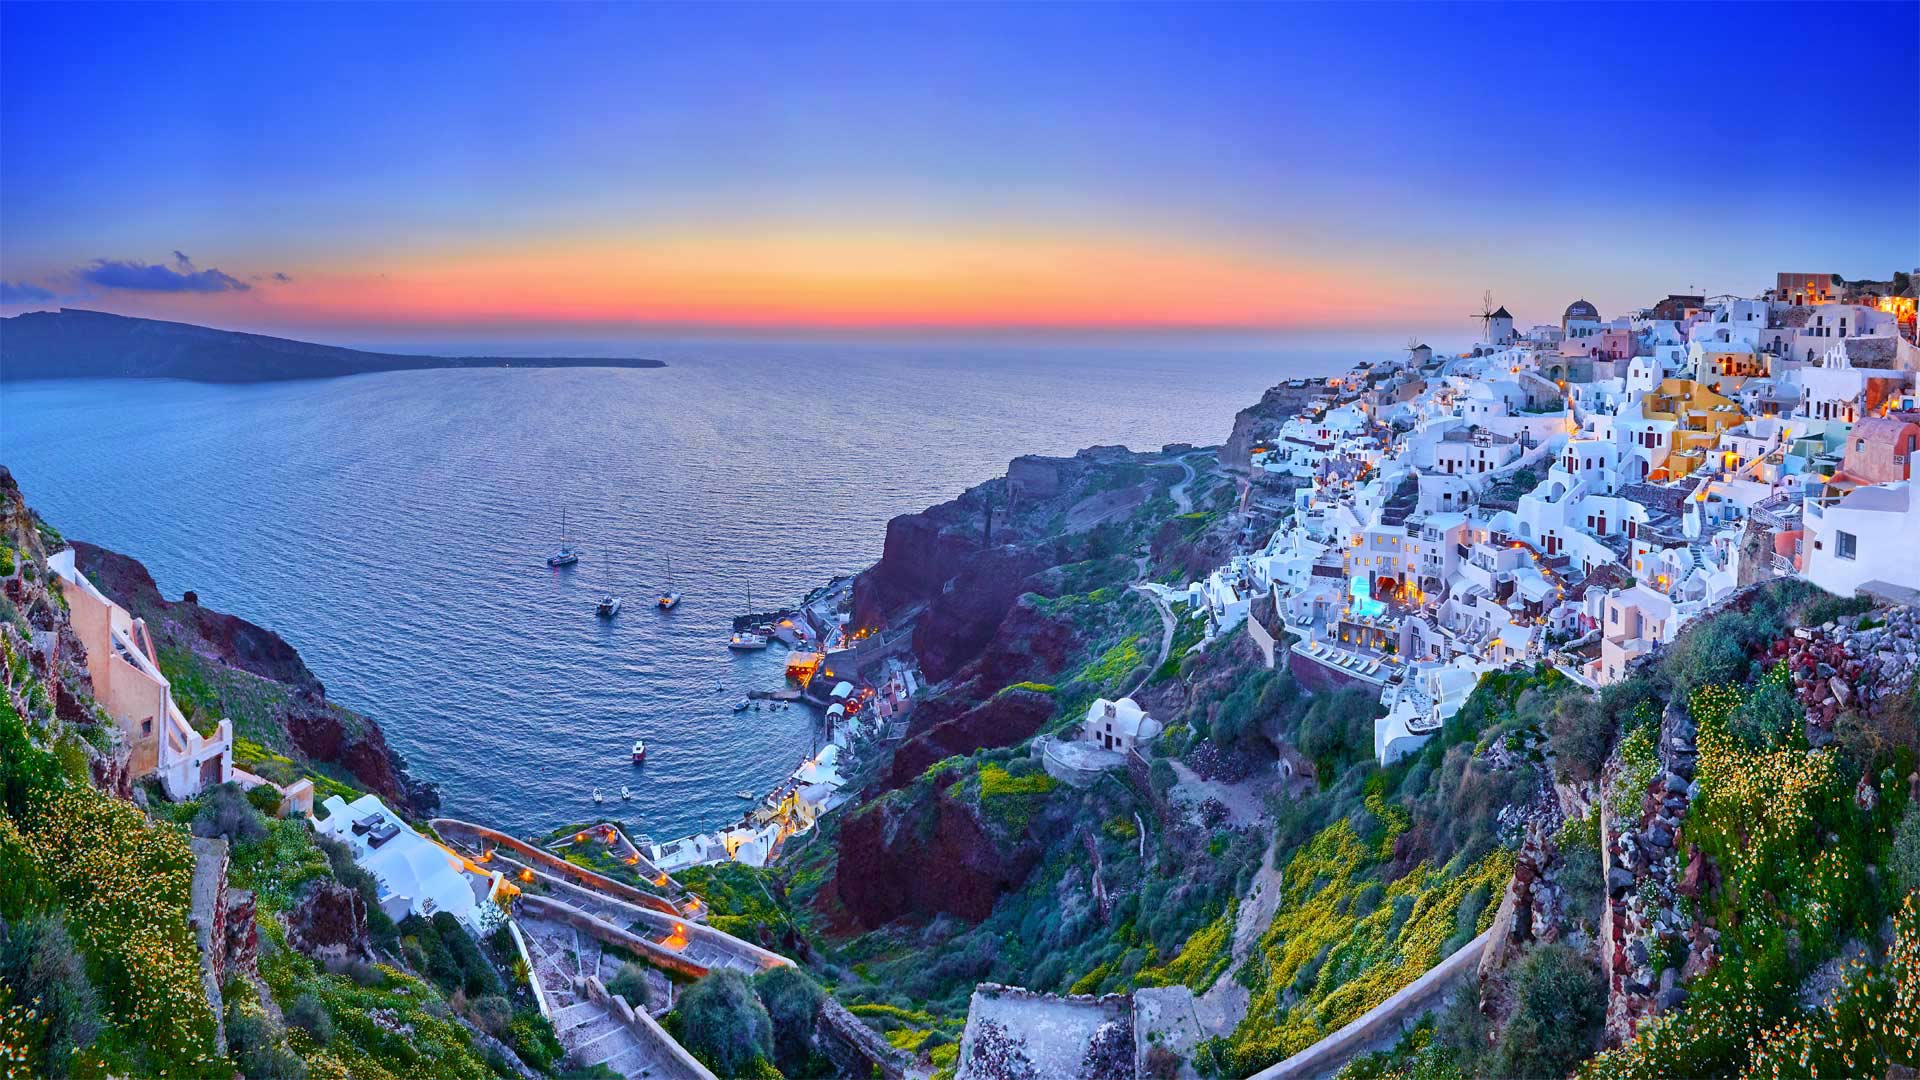 The village of Oia on the island of Santorini, Greece - Zebra-Studio/Shutterstock)